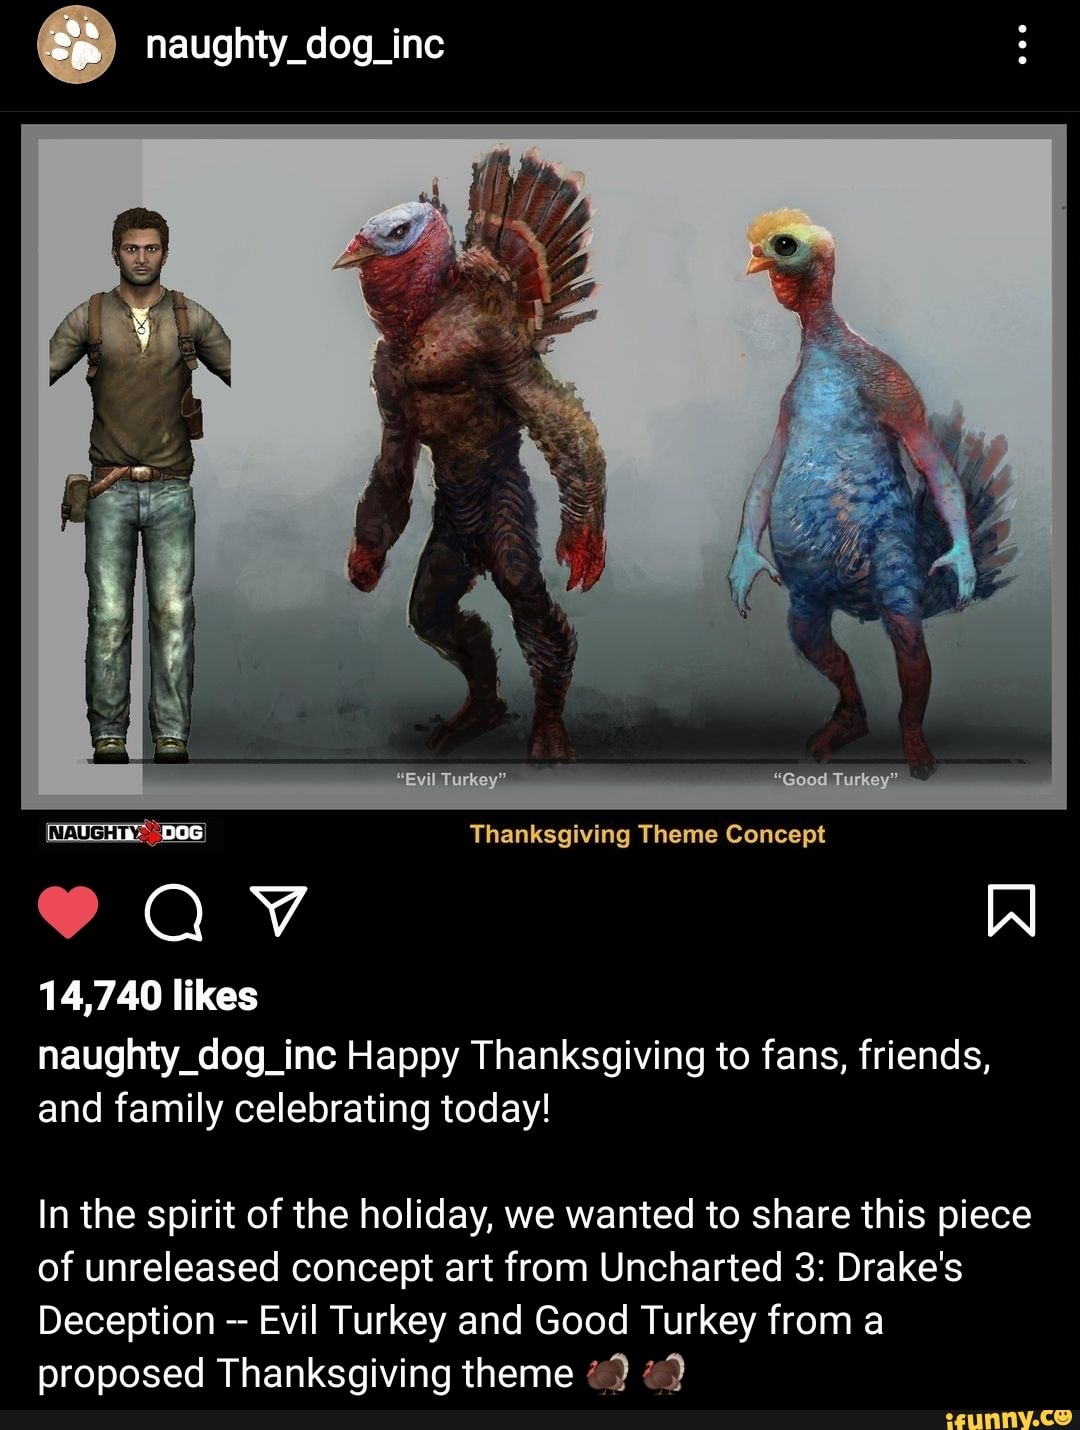 Naughty_dog_inc : Turkey" Thanksgiving Theme Concept 14,740 likes